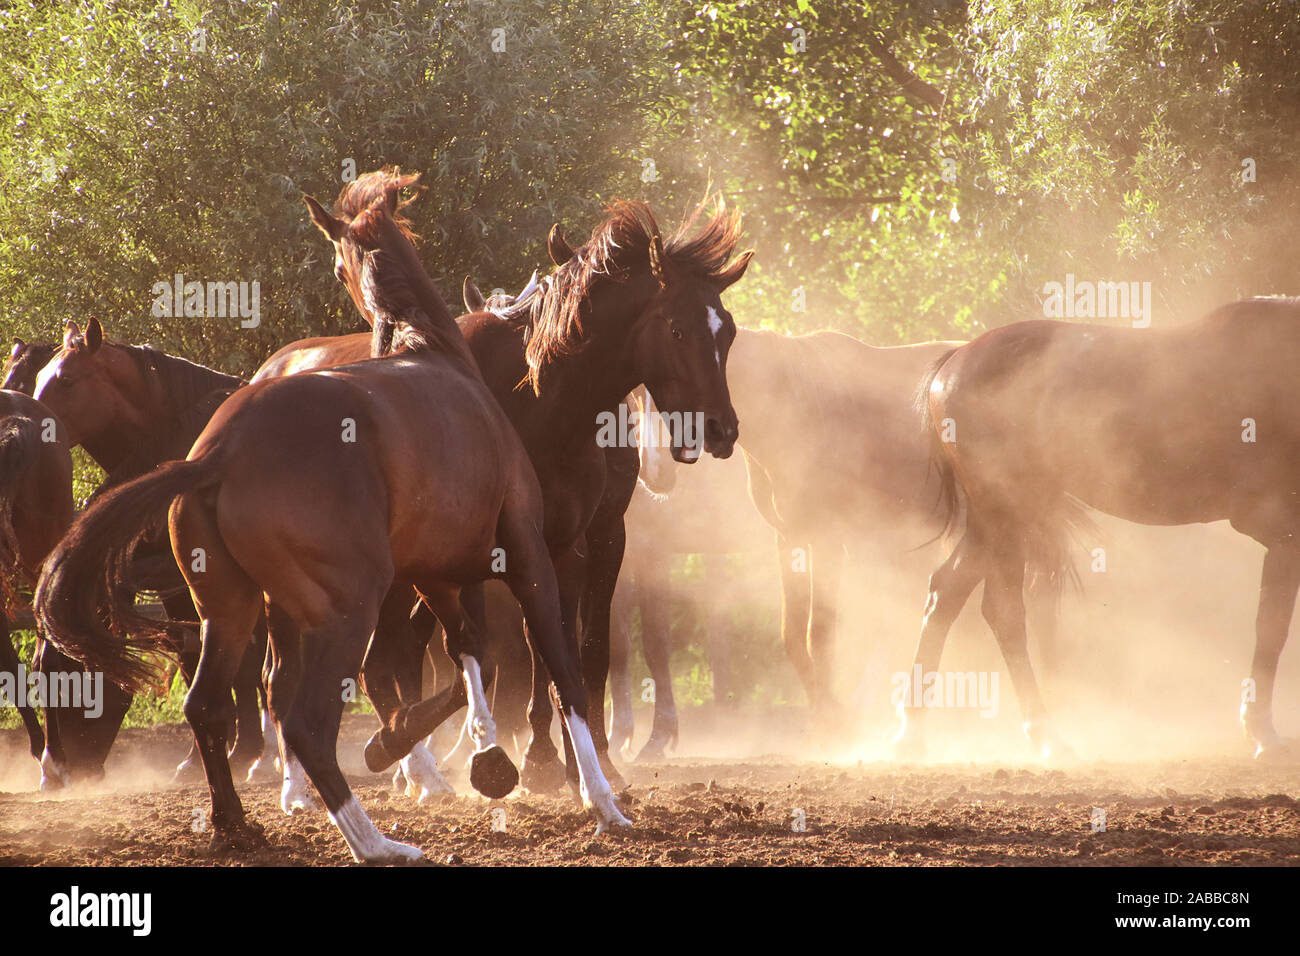 Herd of horses in a field, Greece Stock Photo